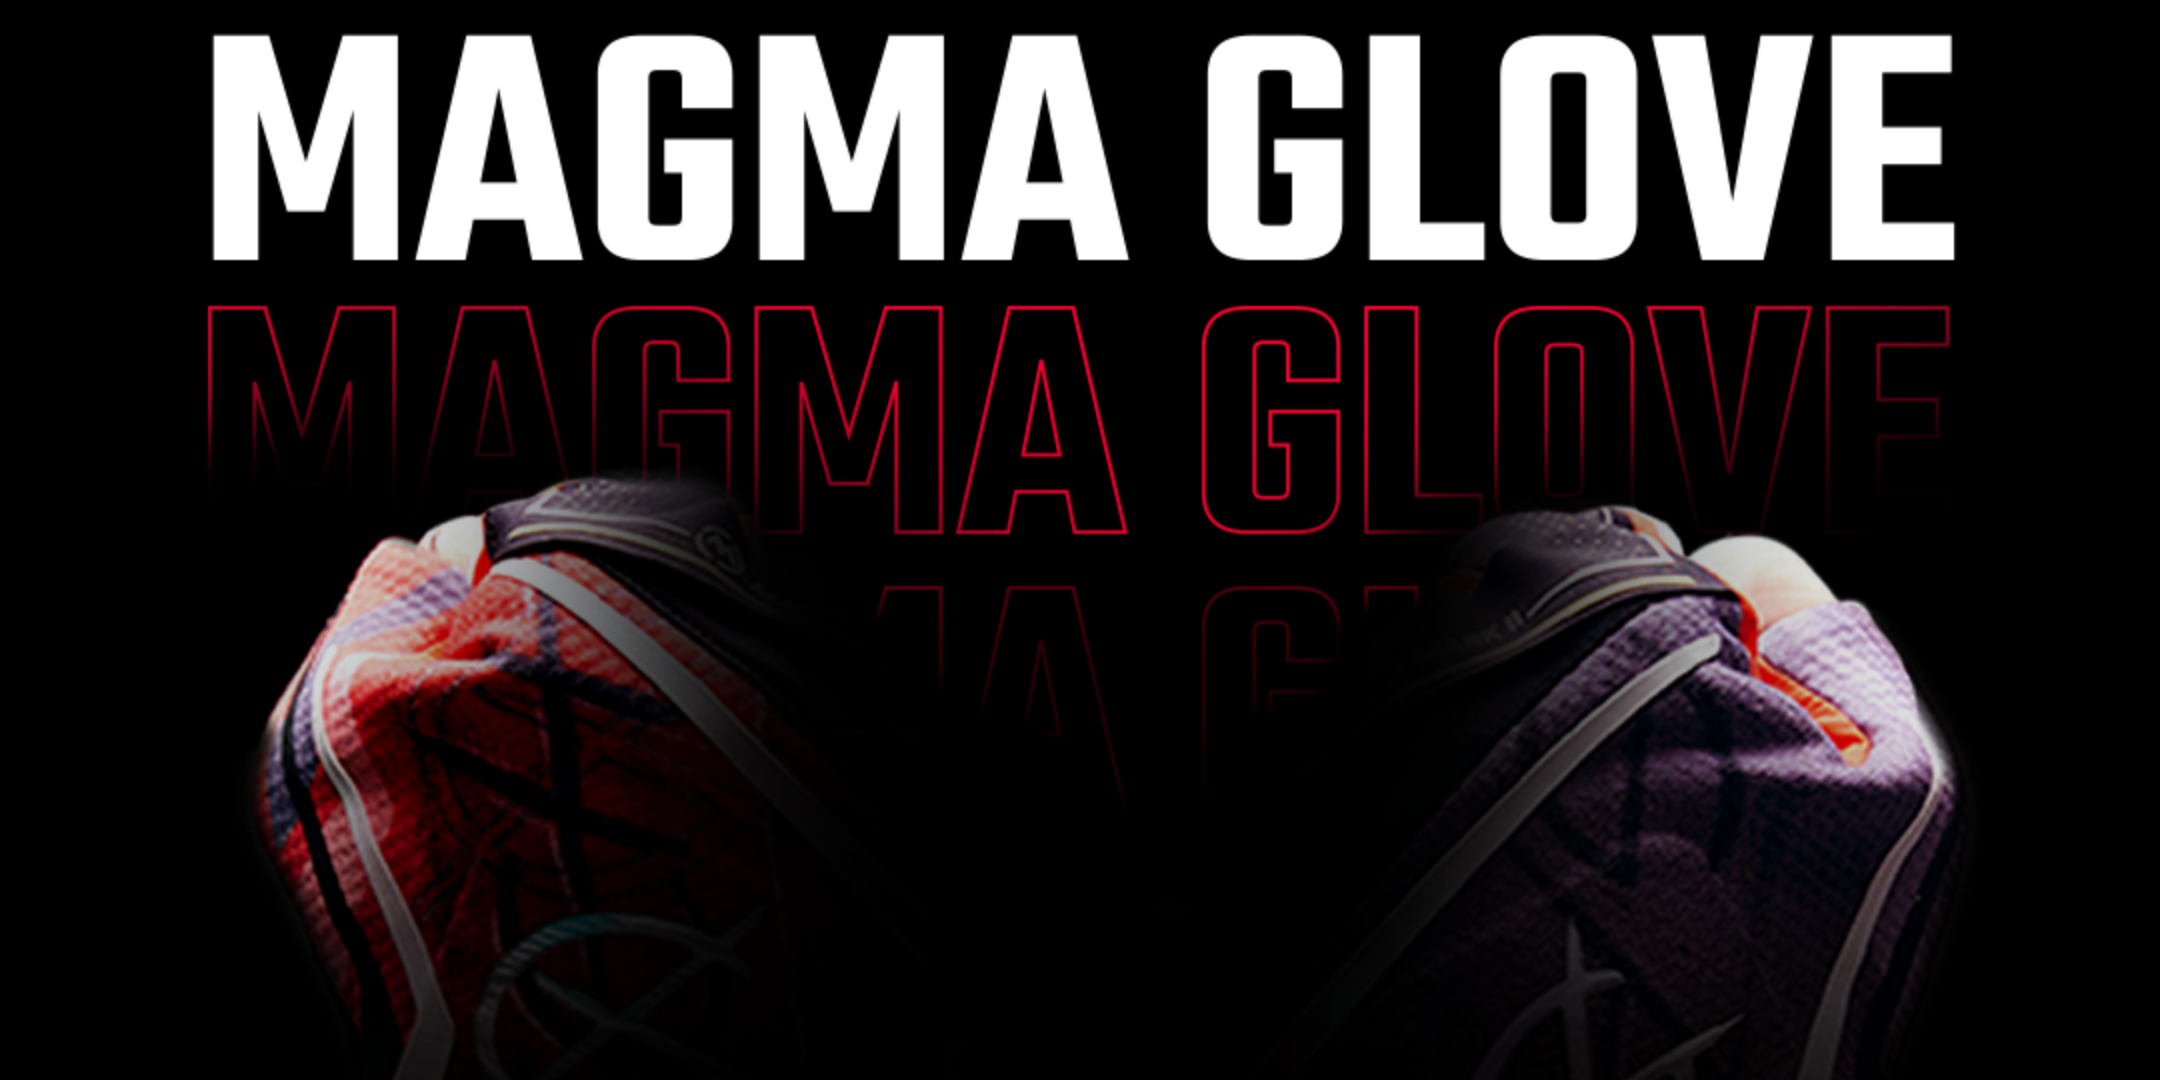 The Magma Glove 